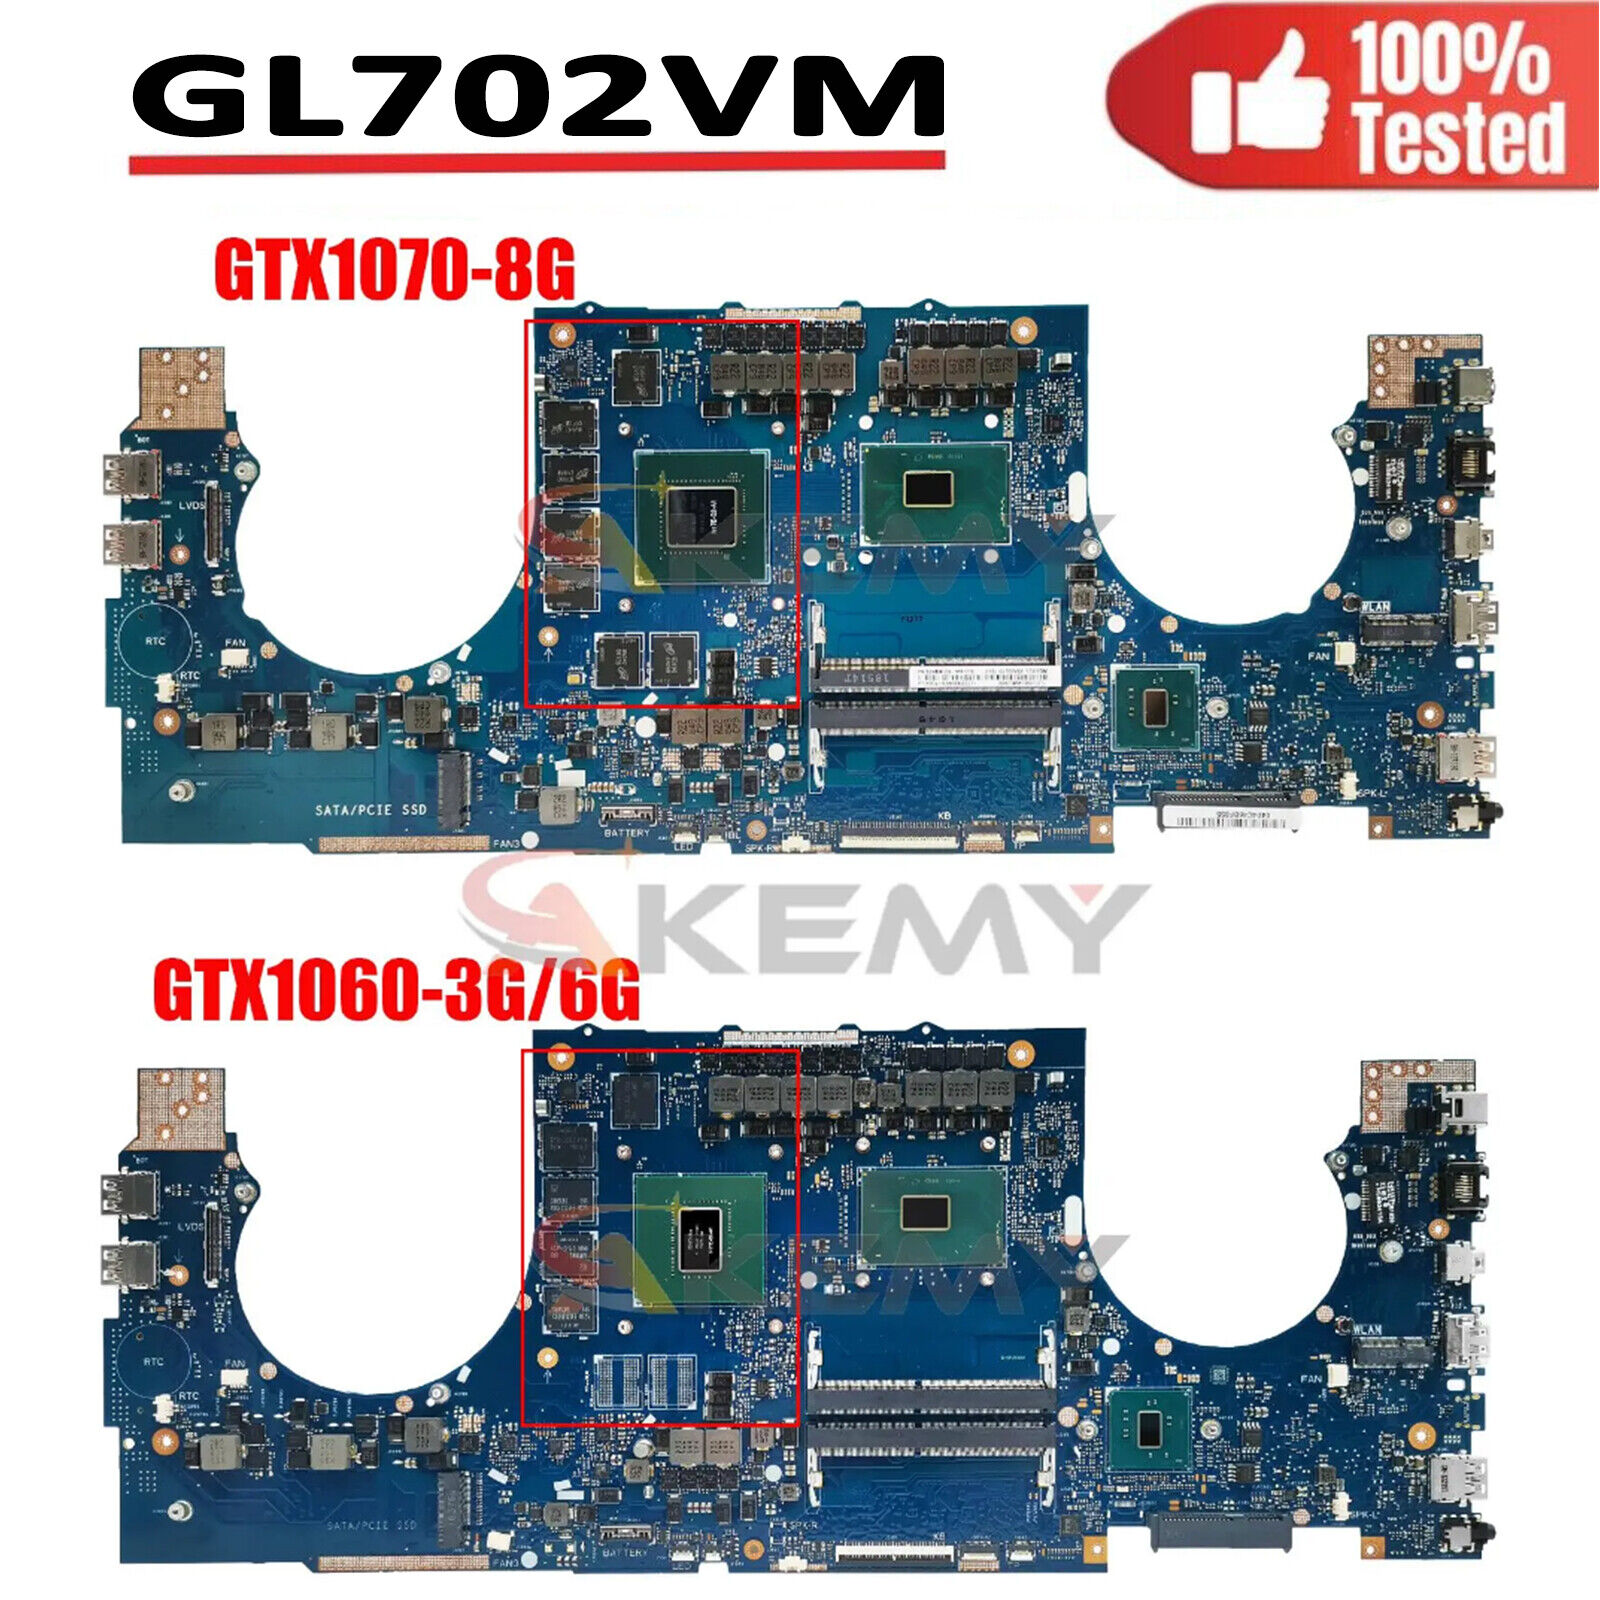 Gl702vm Laptop Mainboard For Asus Gl702vmk Gl702vsk Gl702vs W/ I5 I7 Cpu Test ok